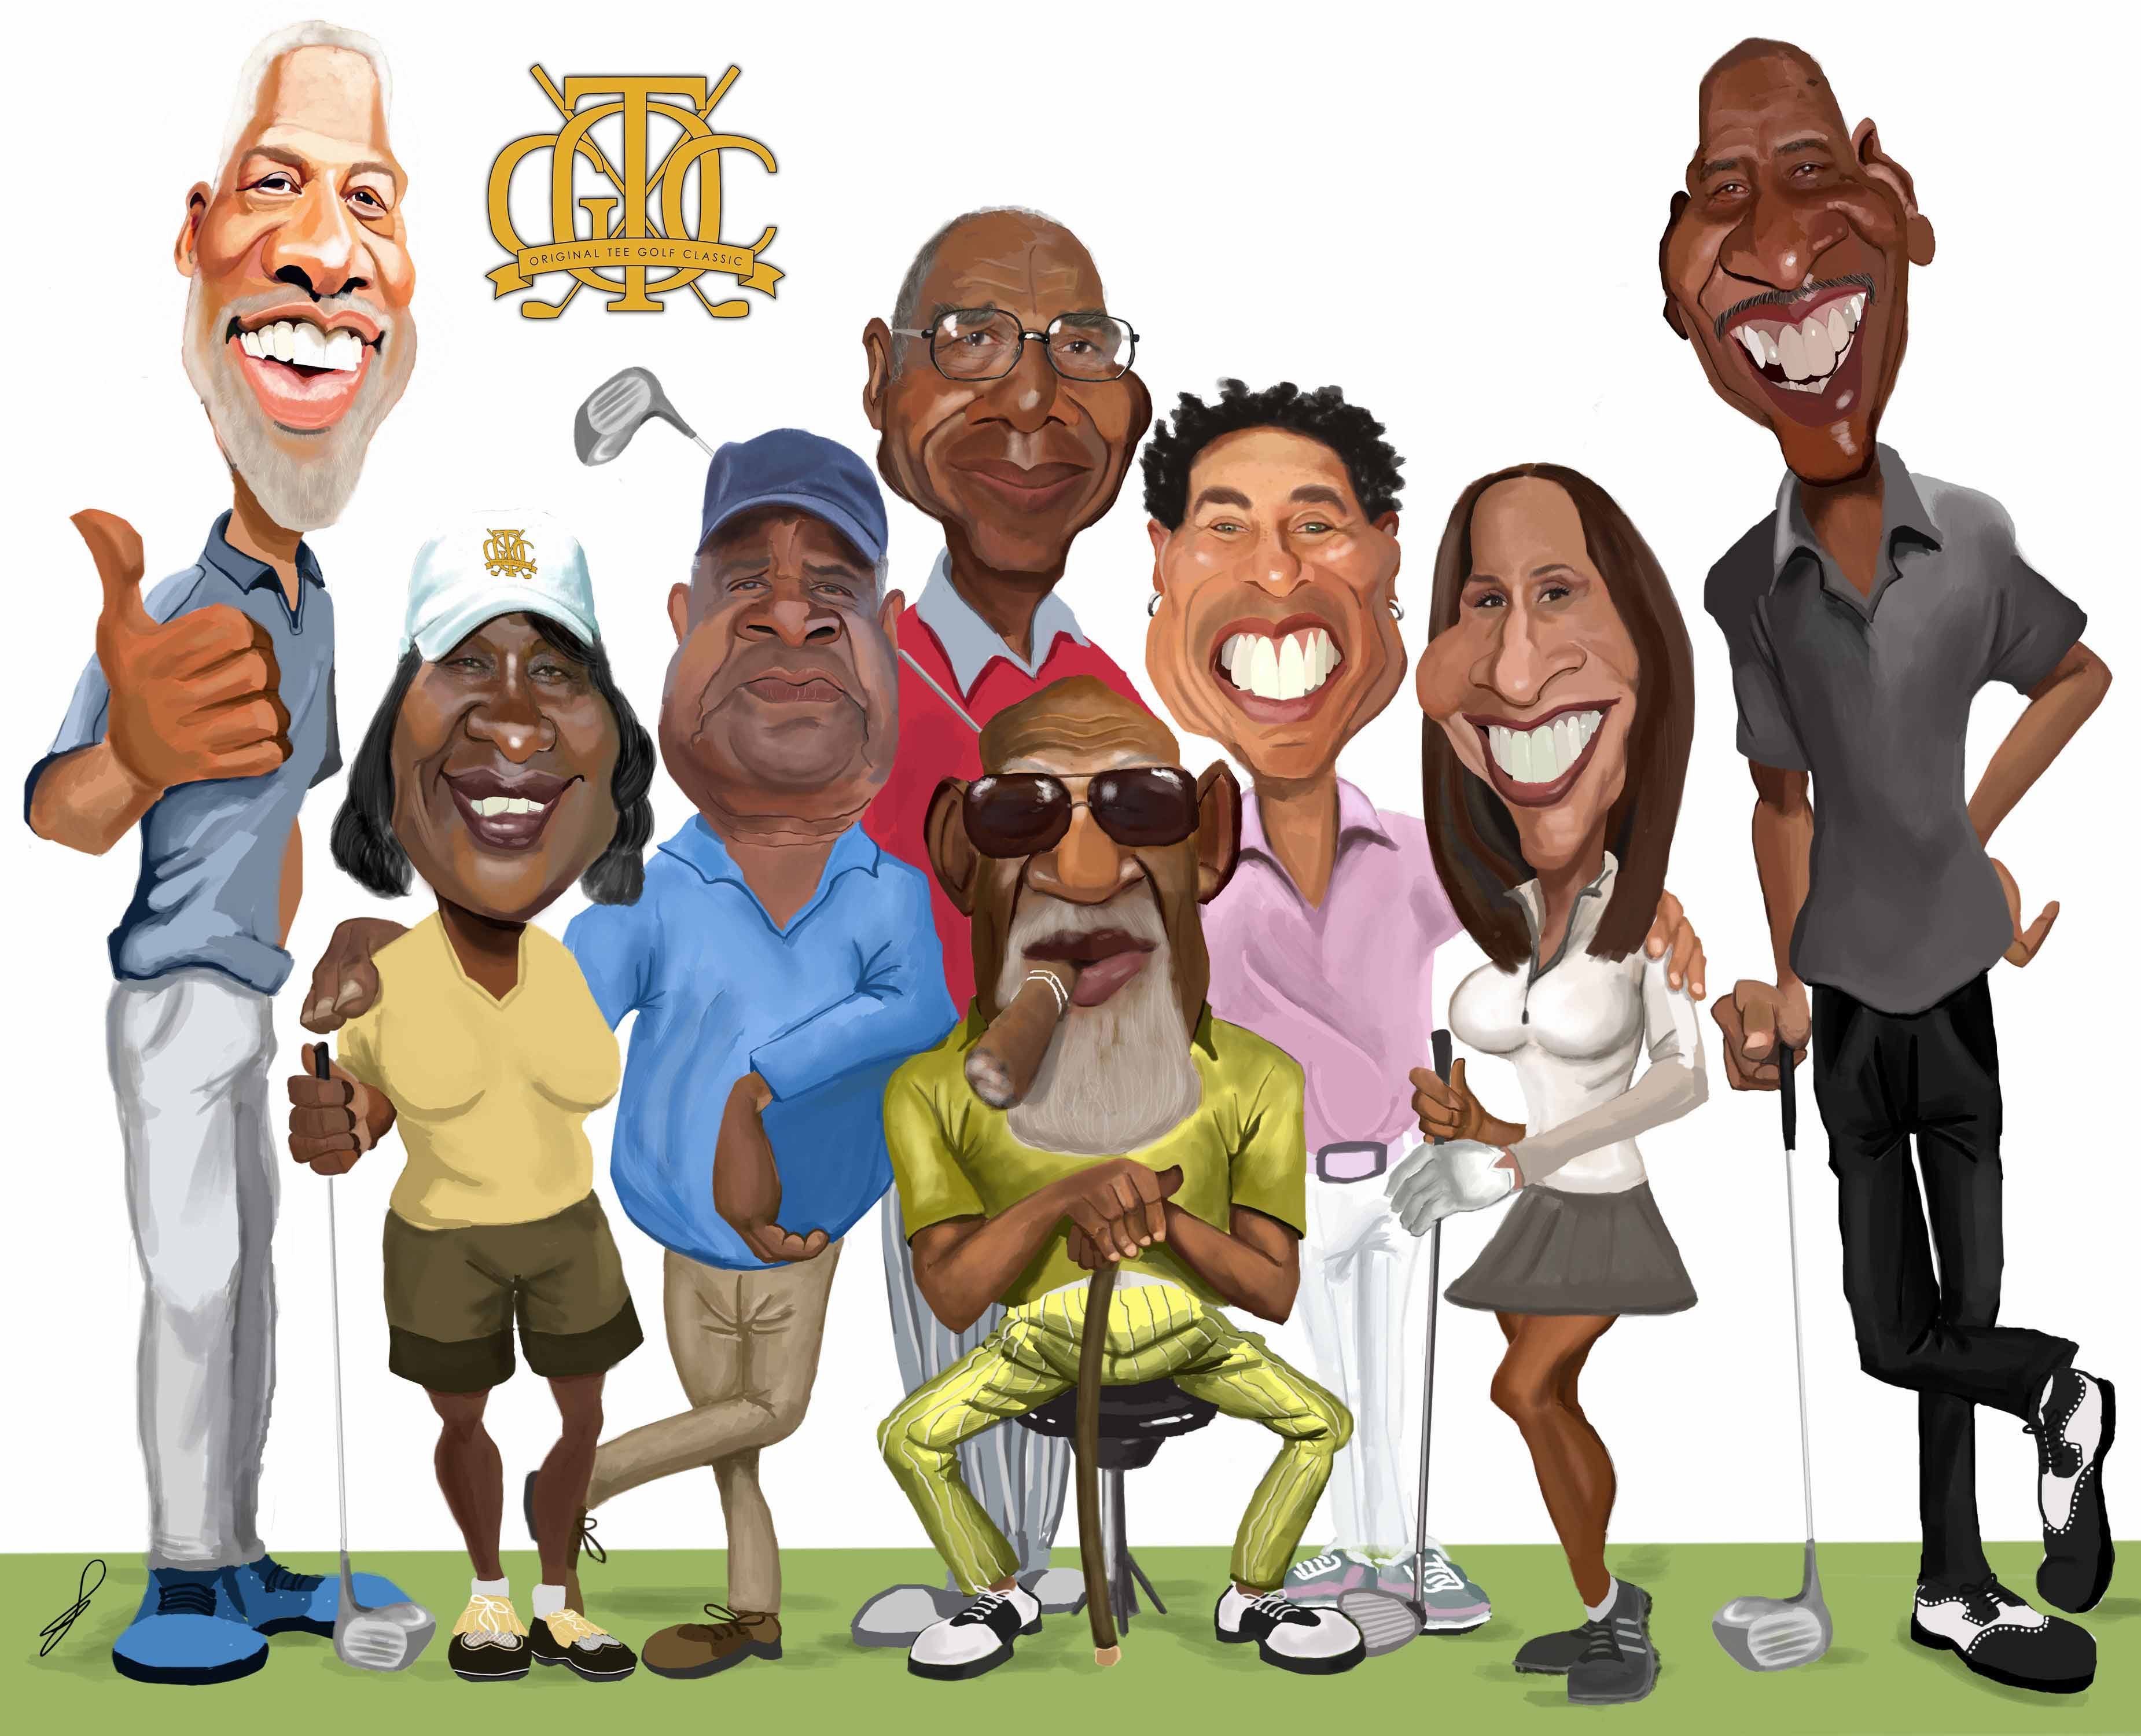 Golf Tournament Cartoon